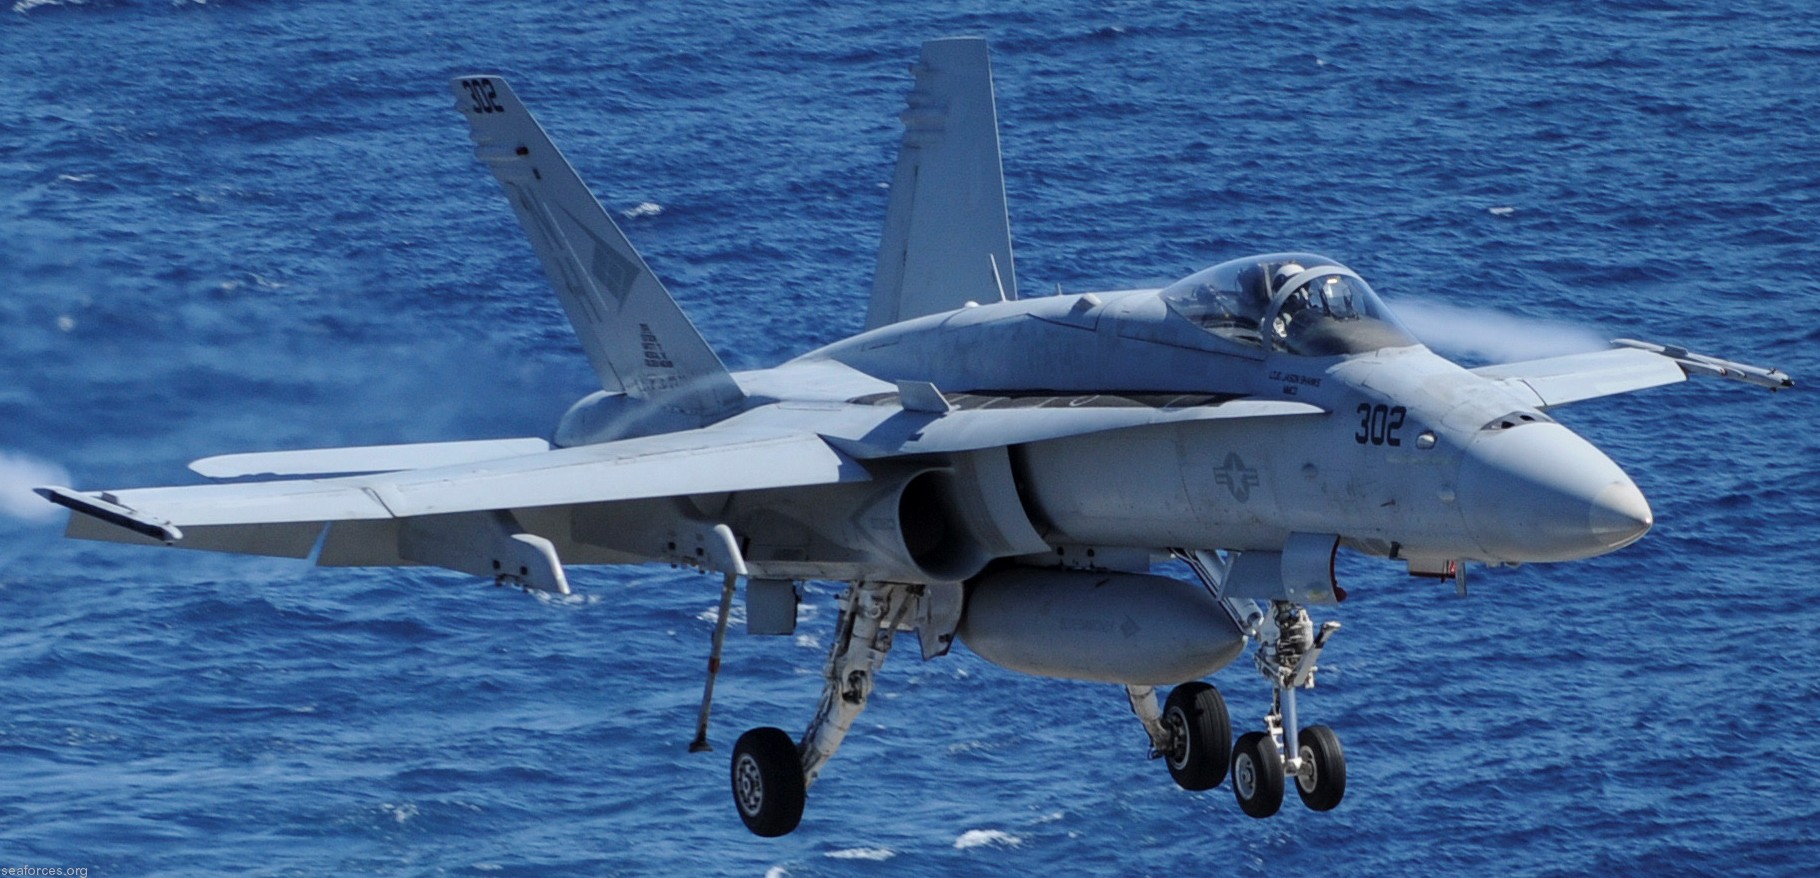 vfa-146 blue diamonds strike fighter squadron f/a-18c hornet carrier air wing cvw-11 uss nimitz cvn-68 15